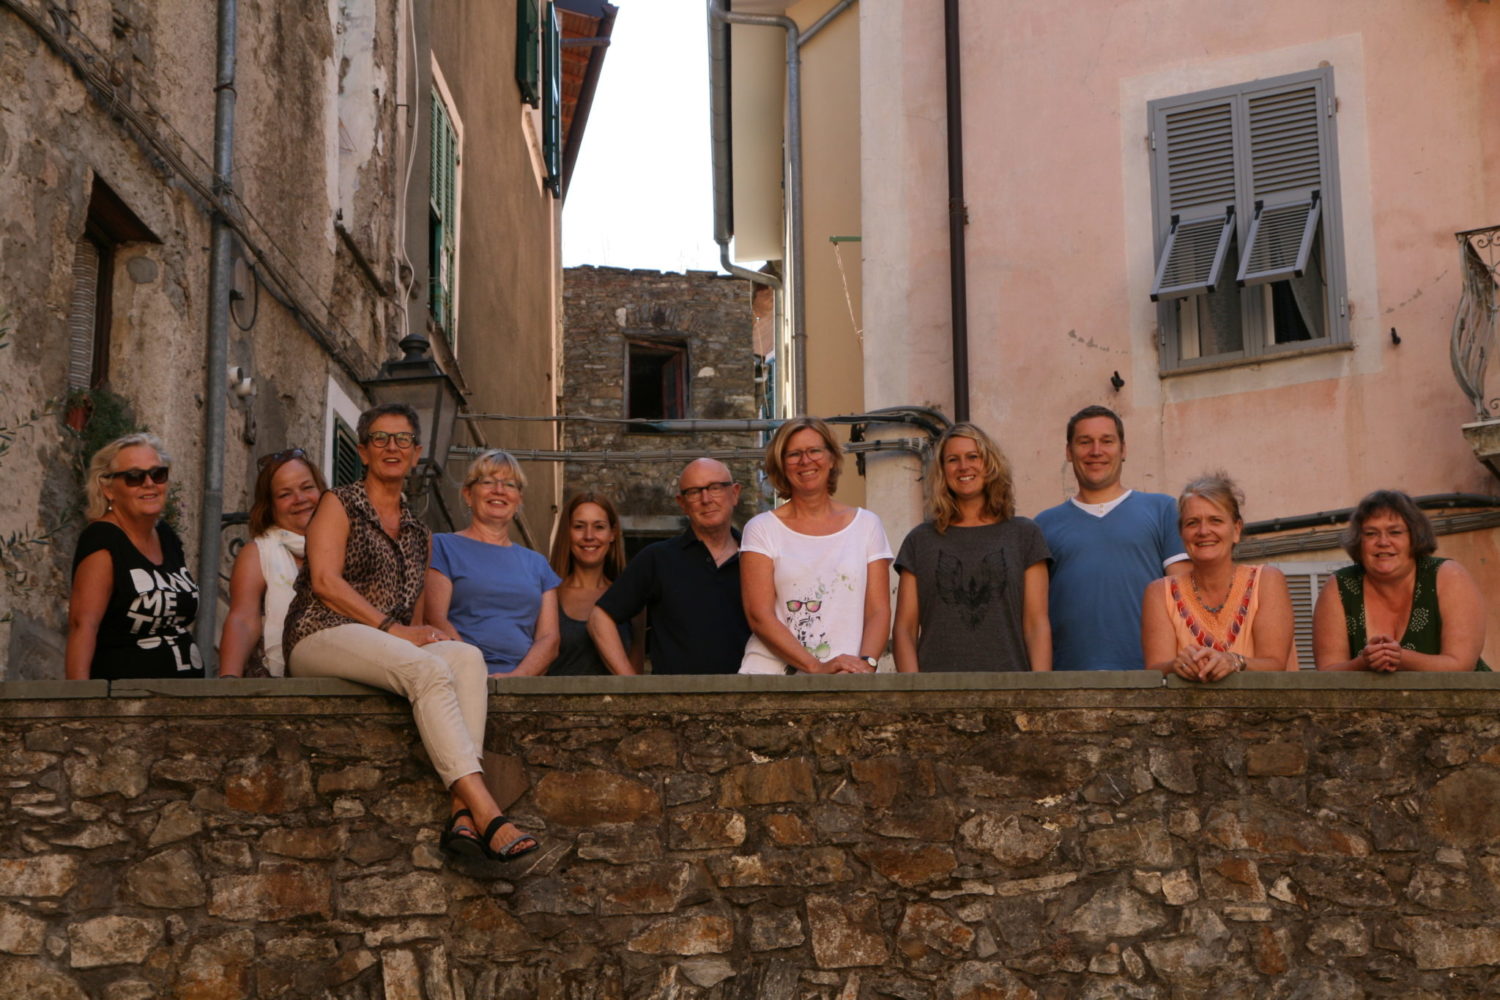 glade kursister bag en mur på sangkursus i italien